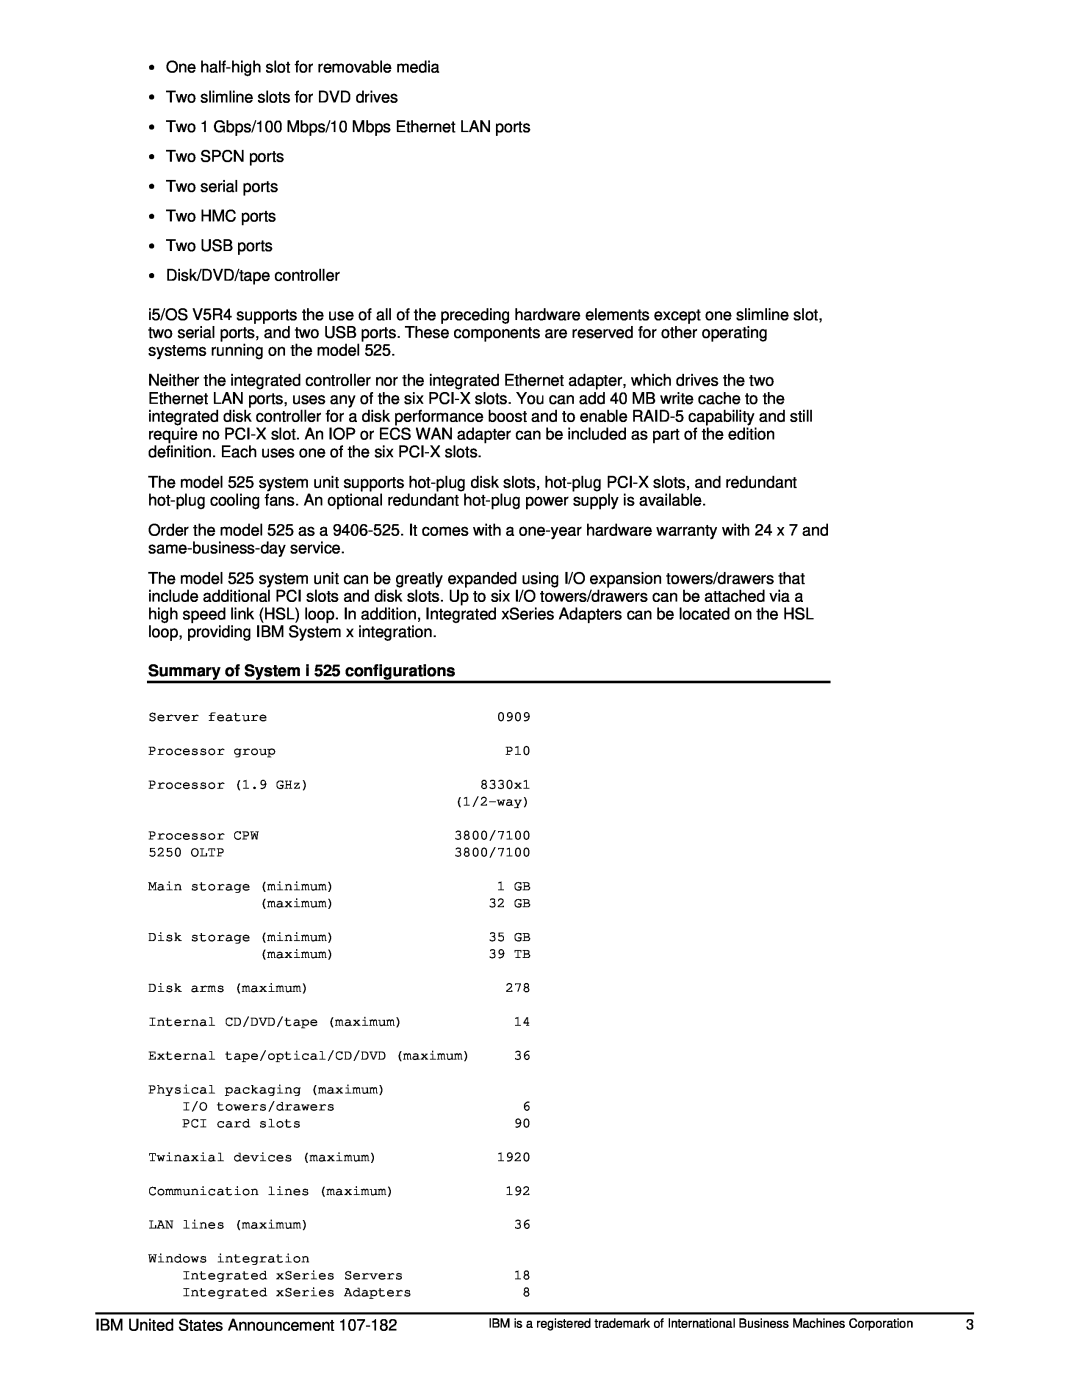 IBM manual Summary of System i 525 configurations, 8330x1, External tape/optical/CD/DVD maximum 